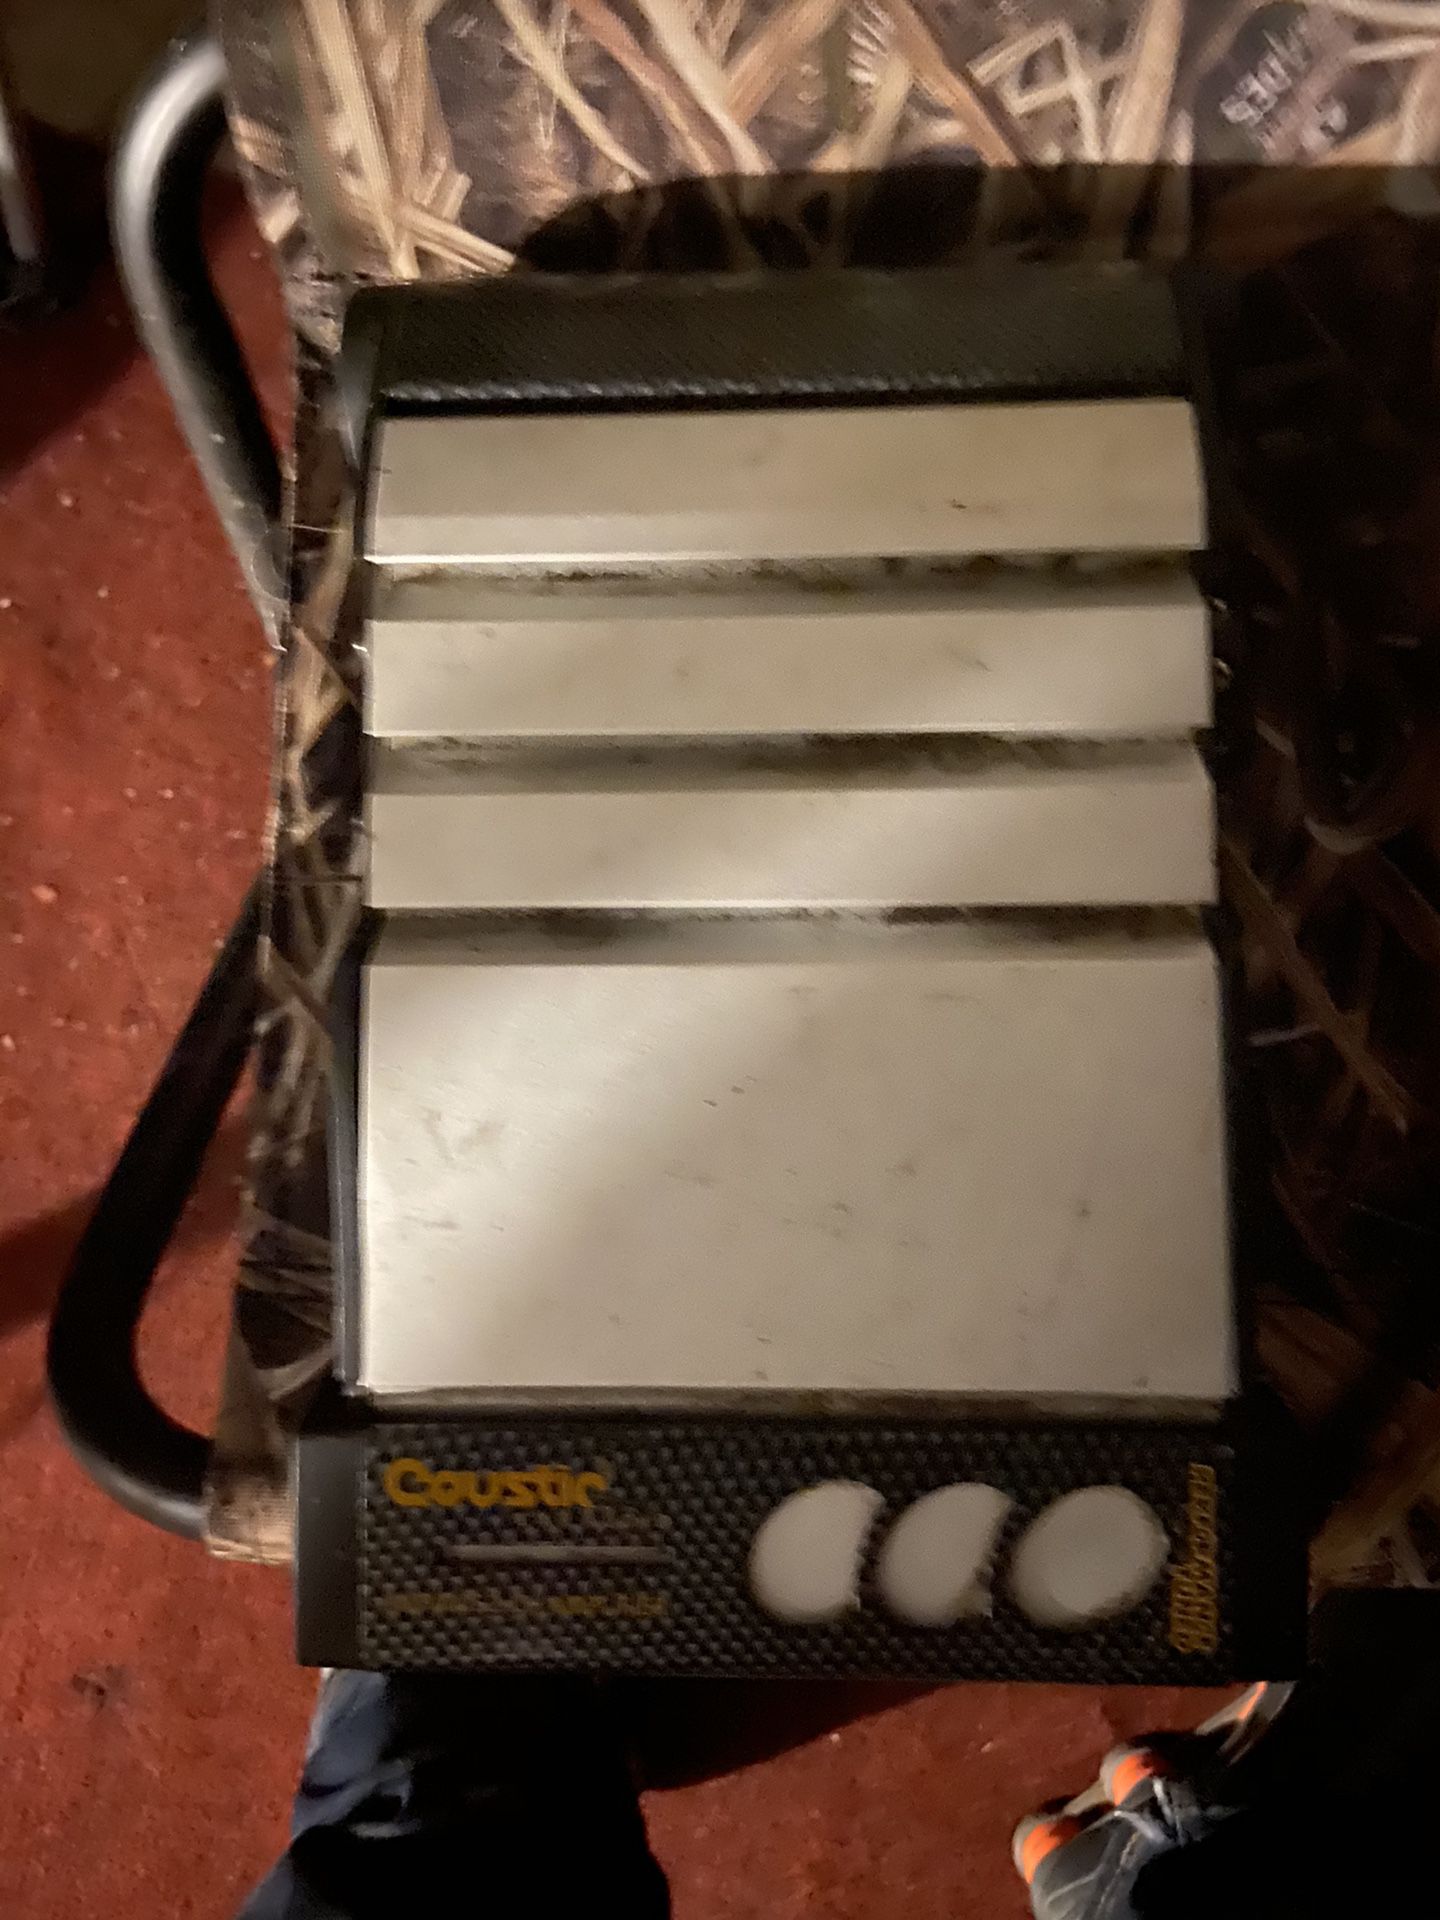 Coustic 400 watt amp